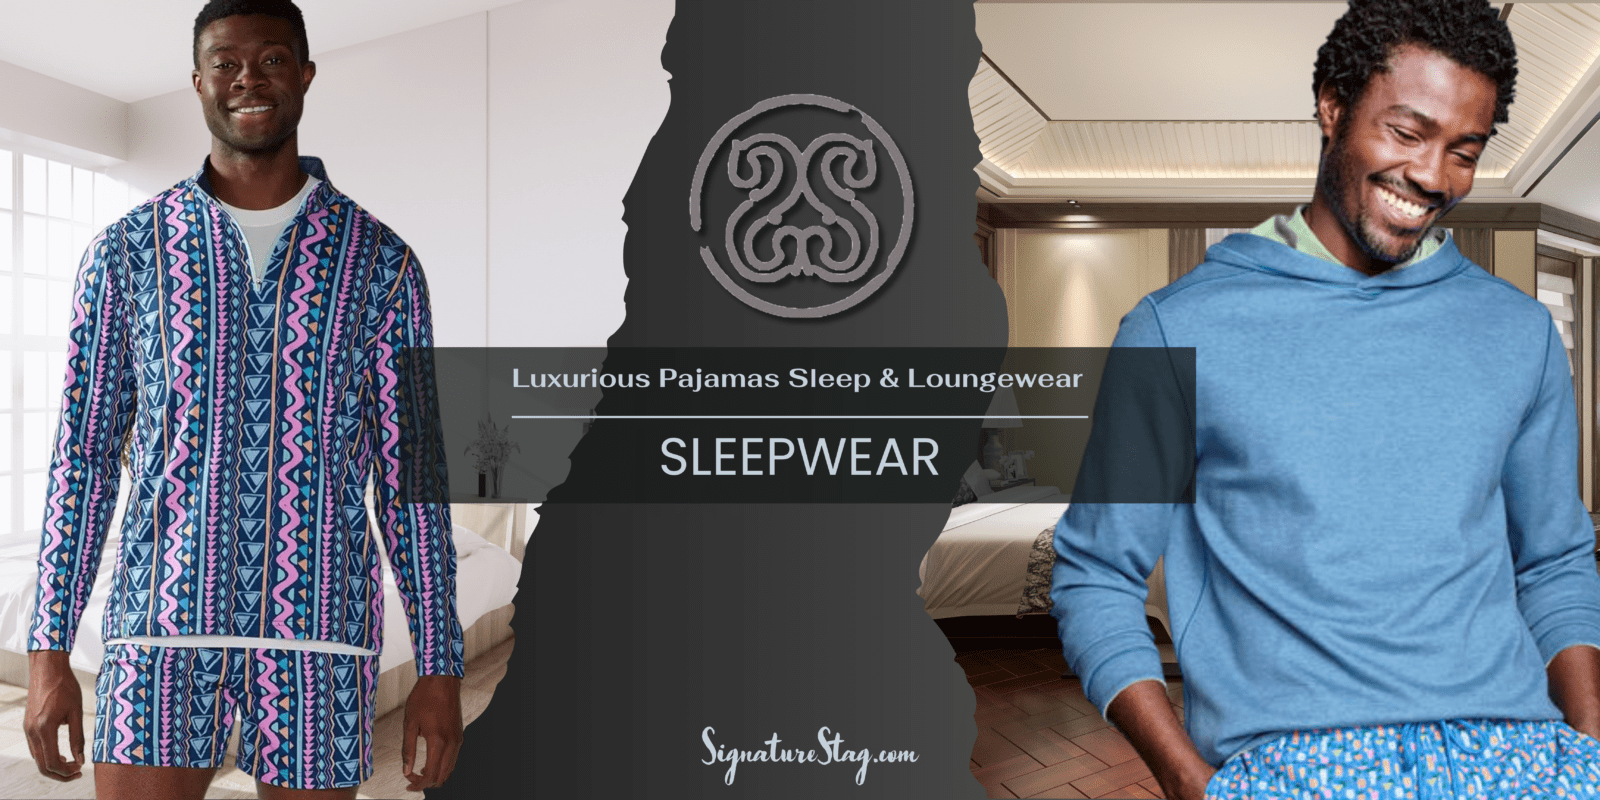 Men Sleepwear, Pajama, and Loungewear in Lubbock & Midland TX. Luxurious home lounging and nightwear clothing. Pajamas, Shorts and Underwear.